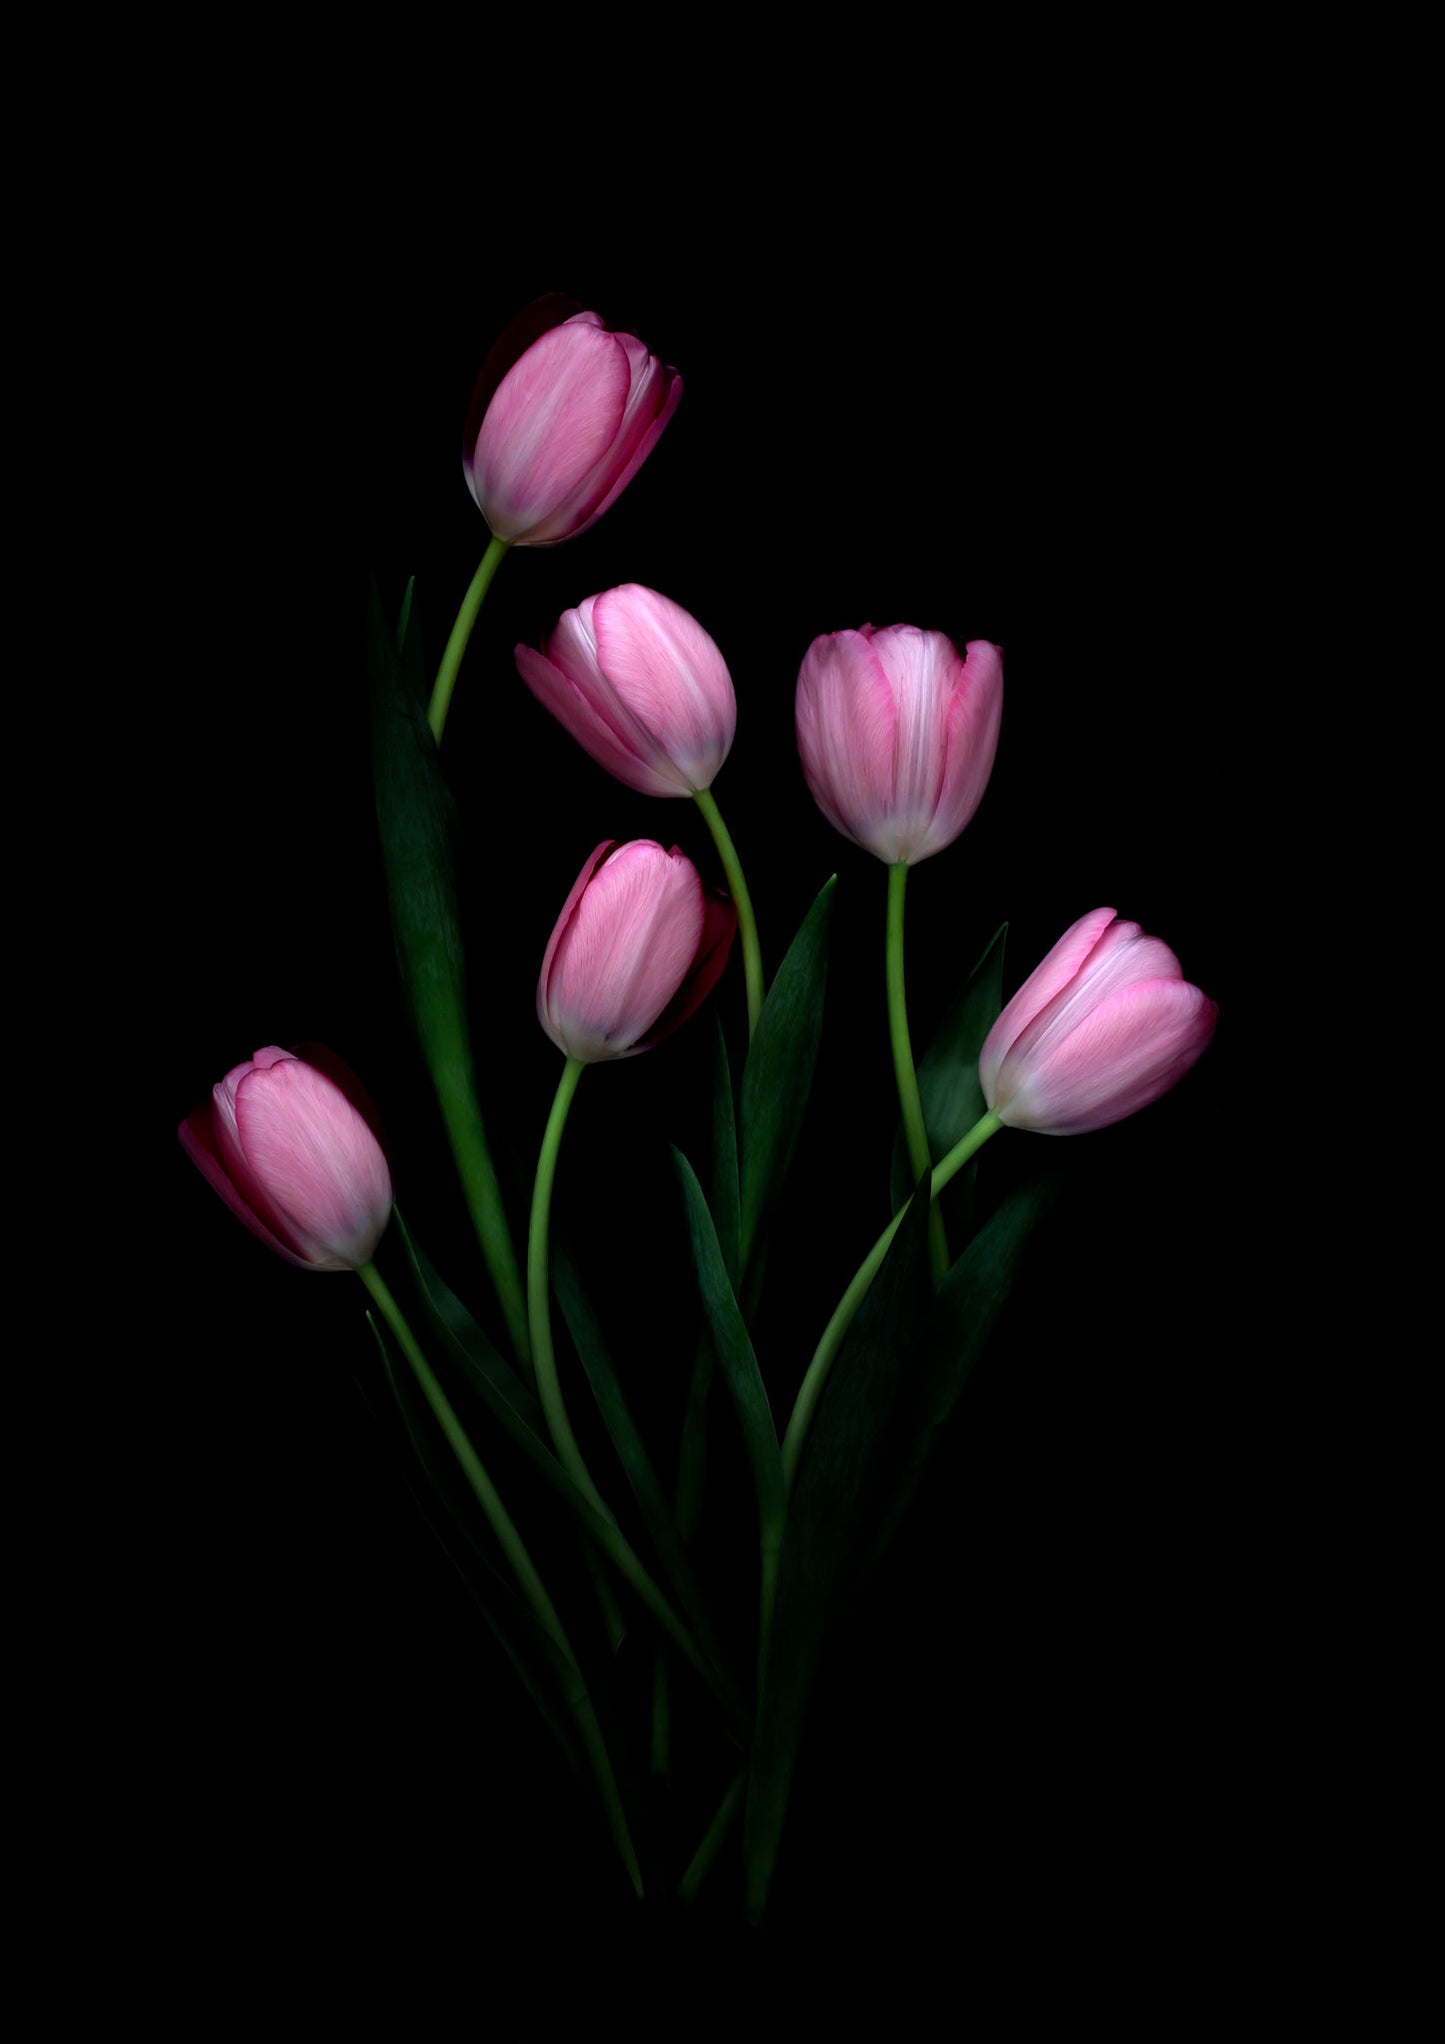 Botanical print of six Pink Tulips on a black background.